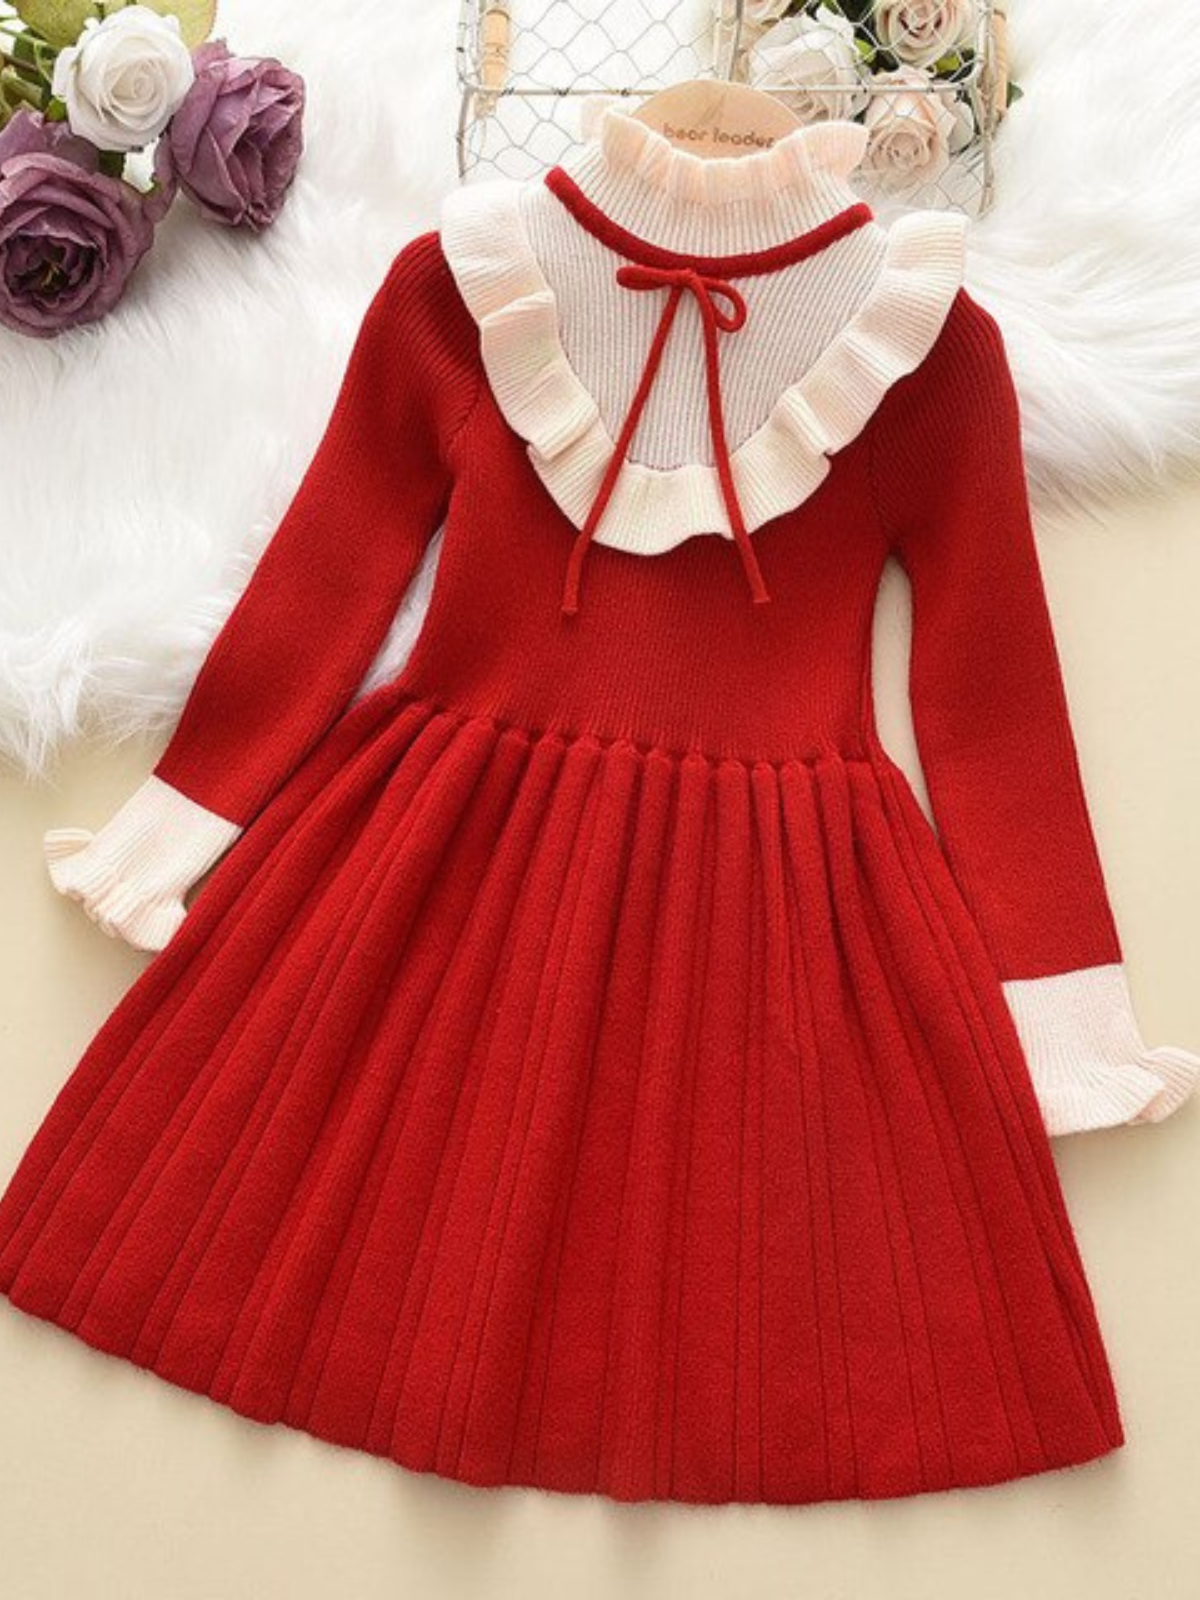 Preppy Chic Dresses | White Bib Collar Red Dress | Mia Belle Girls